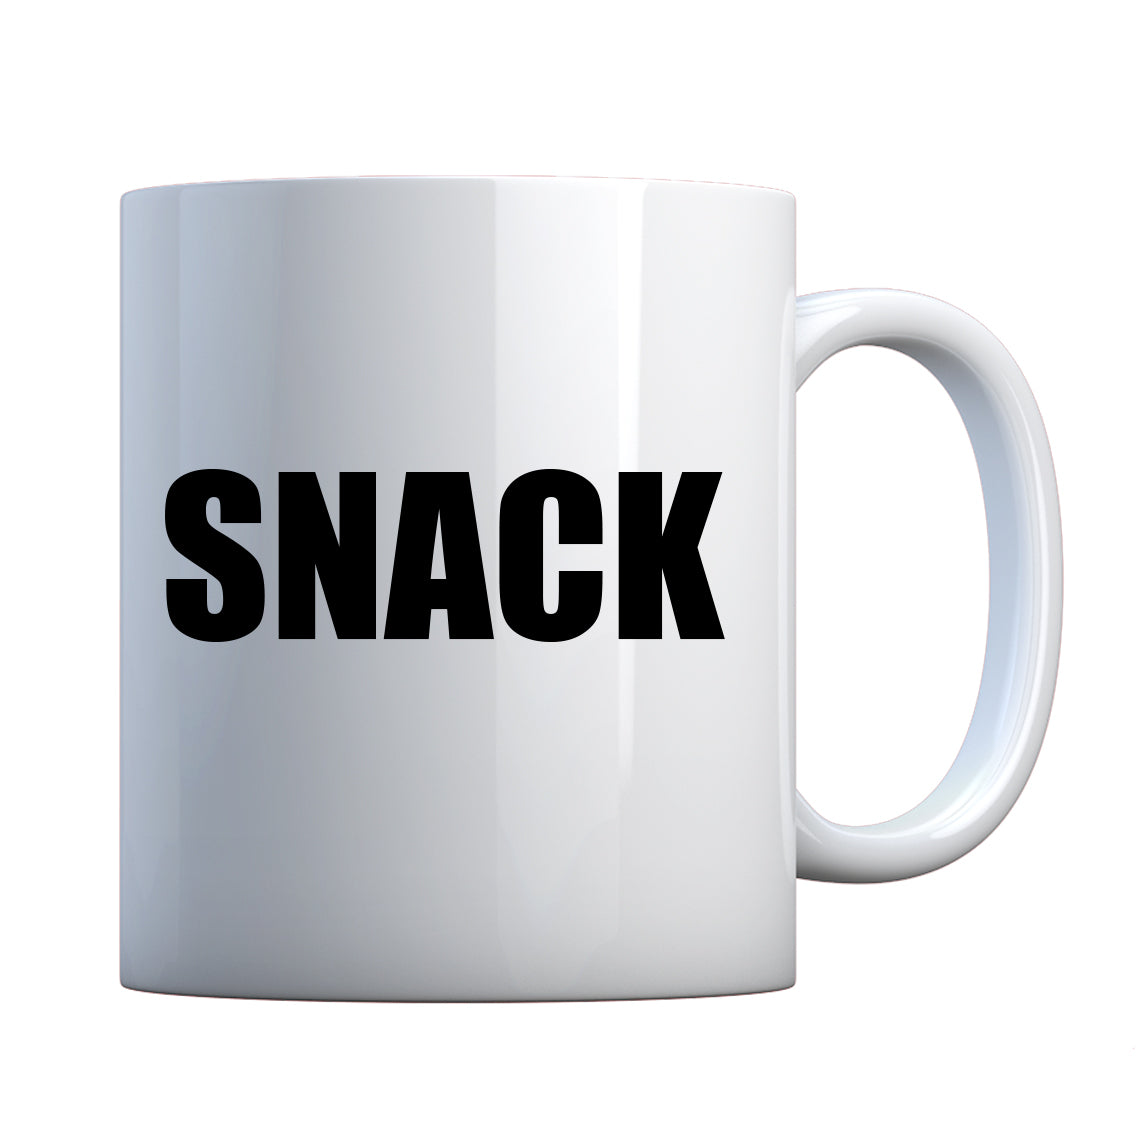 Mug Snack Ceramic Gift Mug